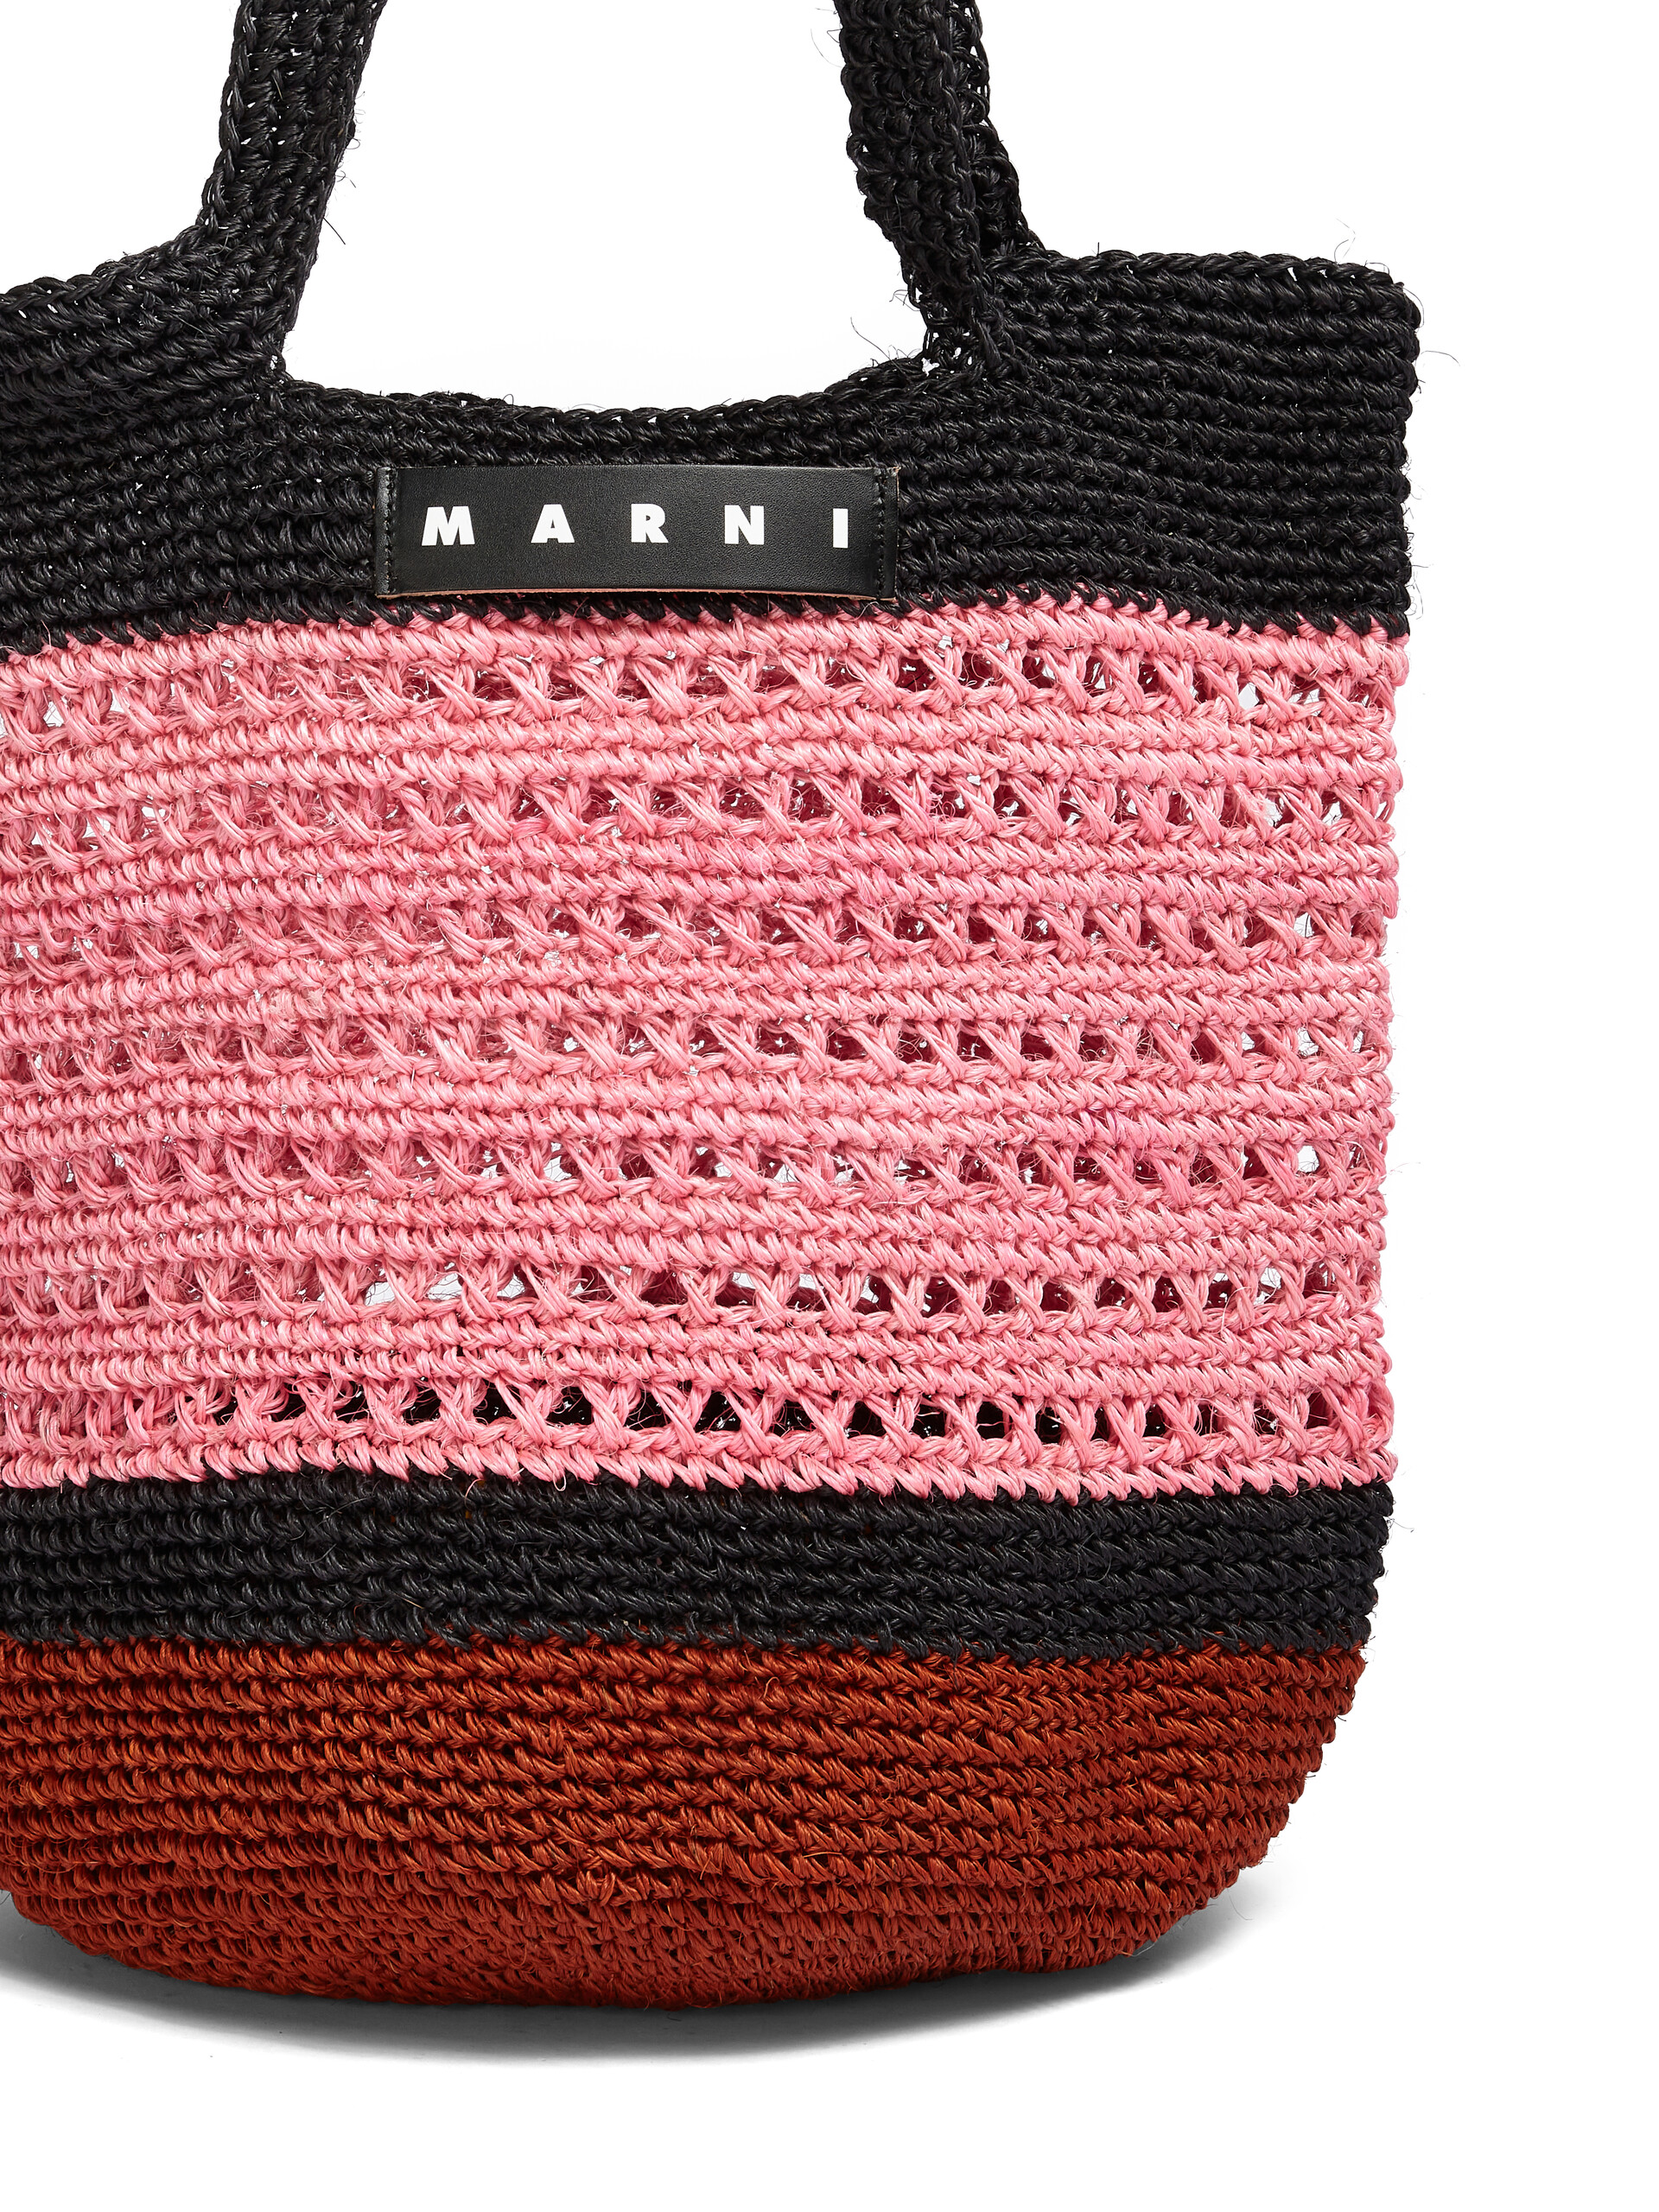 MARNI MARKET bag in pink and black natural fiber - Bags - Image 4